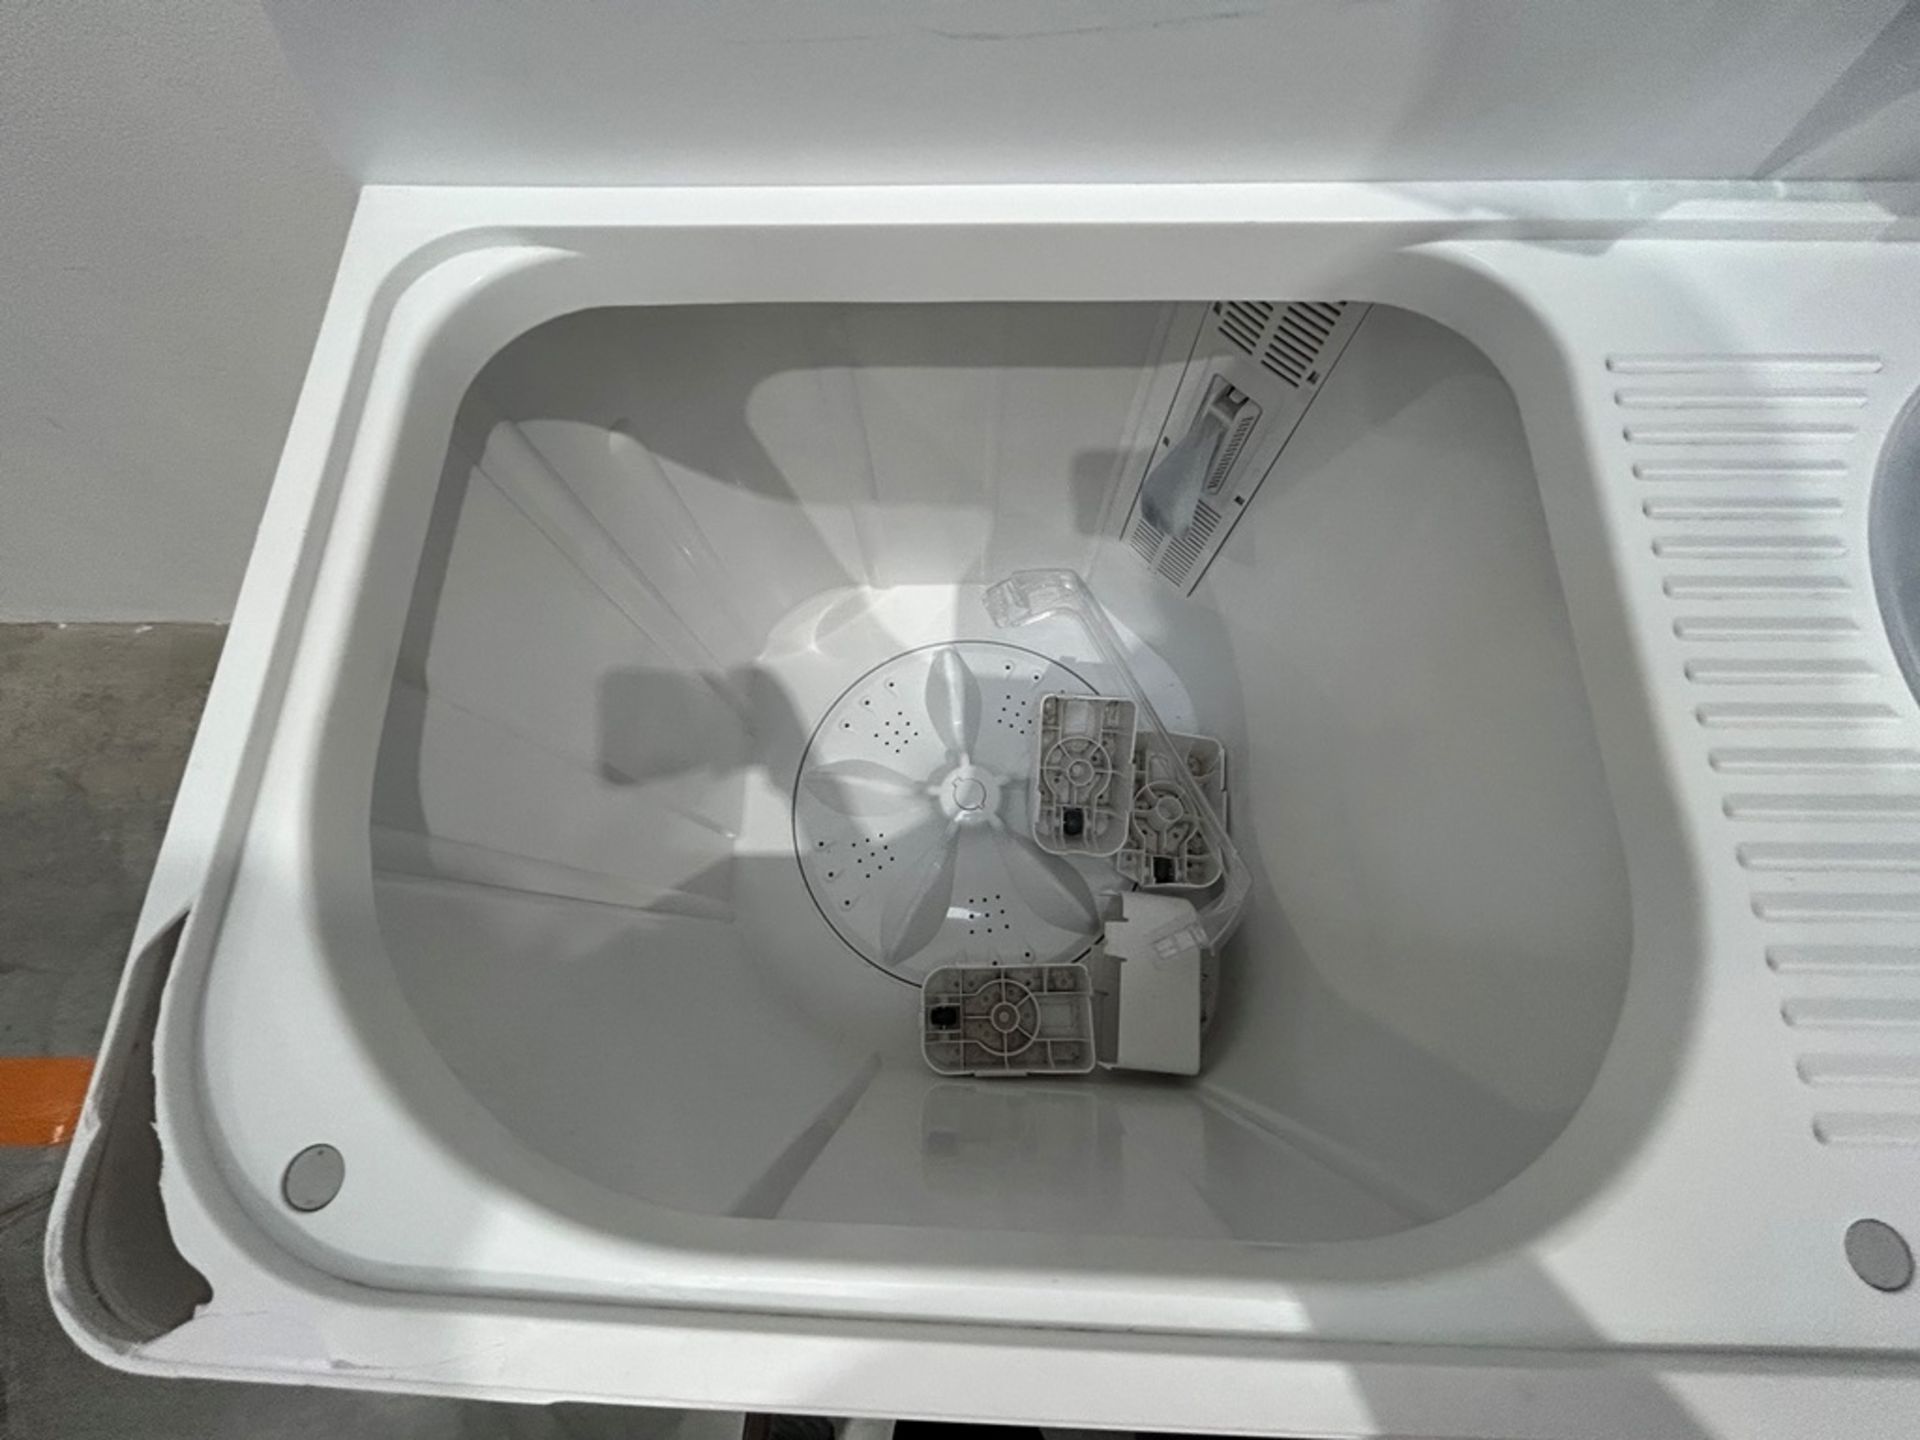 Lote de 2 lavadoras contiene: 1 Lavadora de 18KG Marca HISENSE, Modelo WSA1801P, Serie 220073, Colo - Image 7 of 12